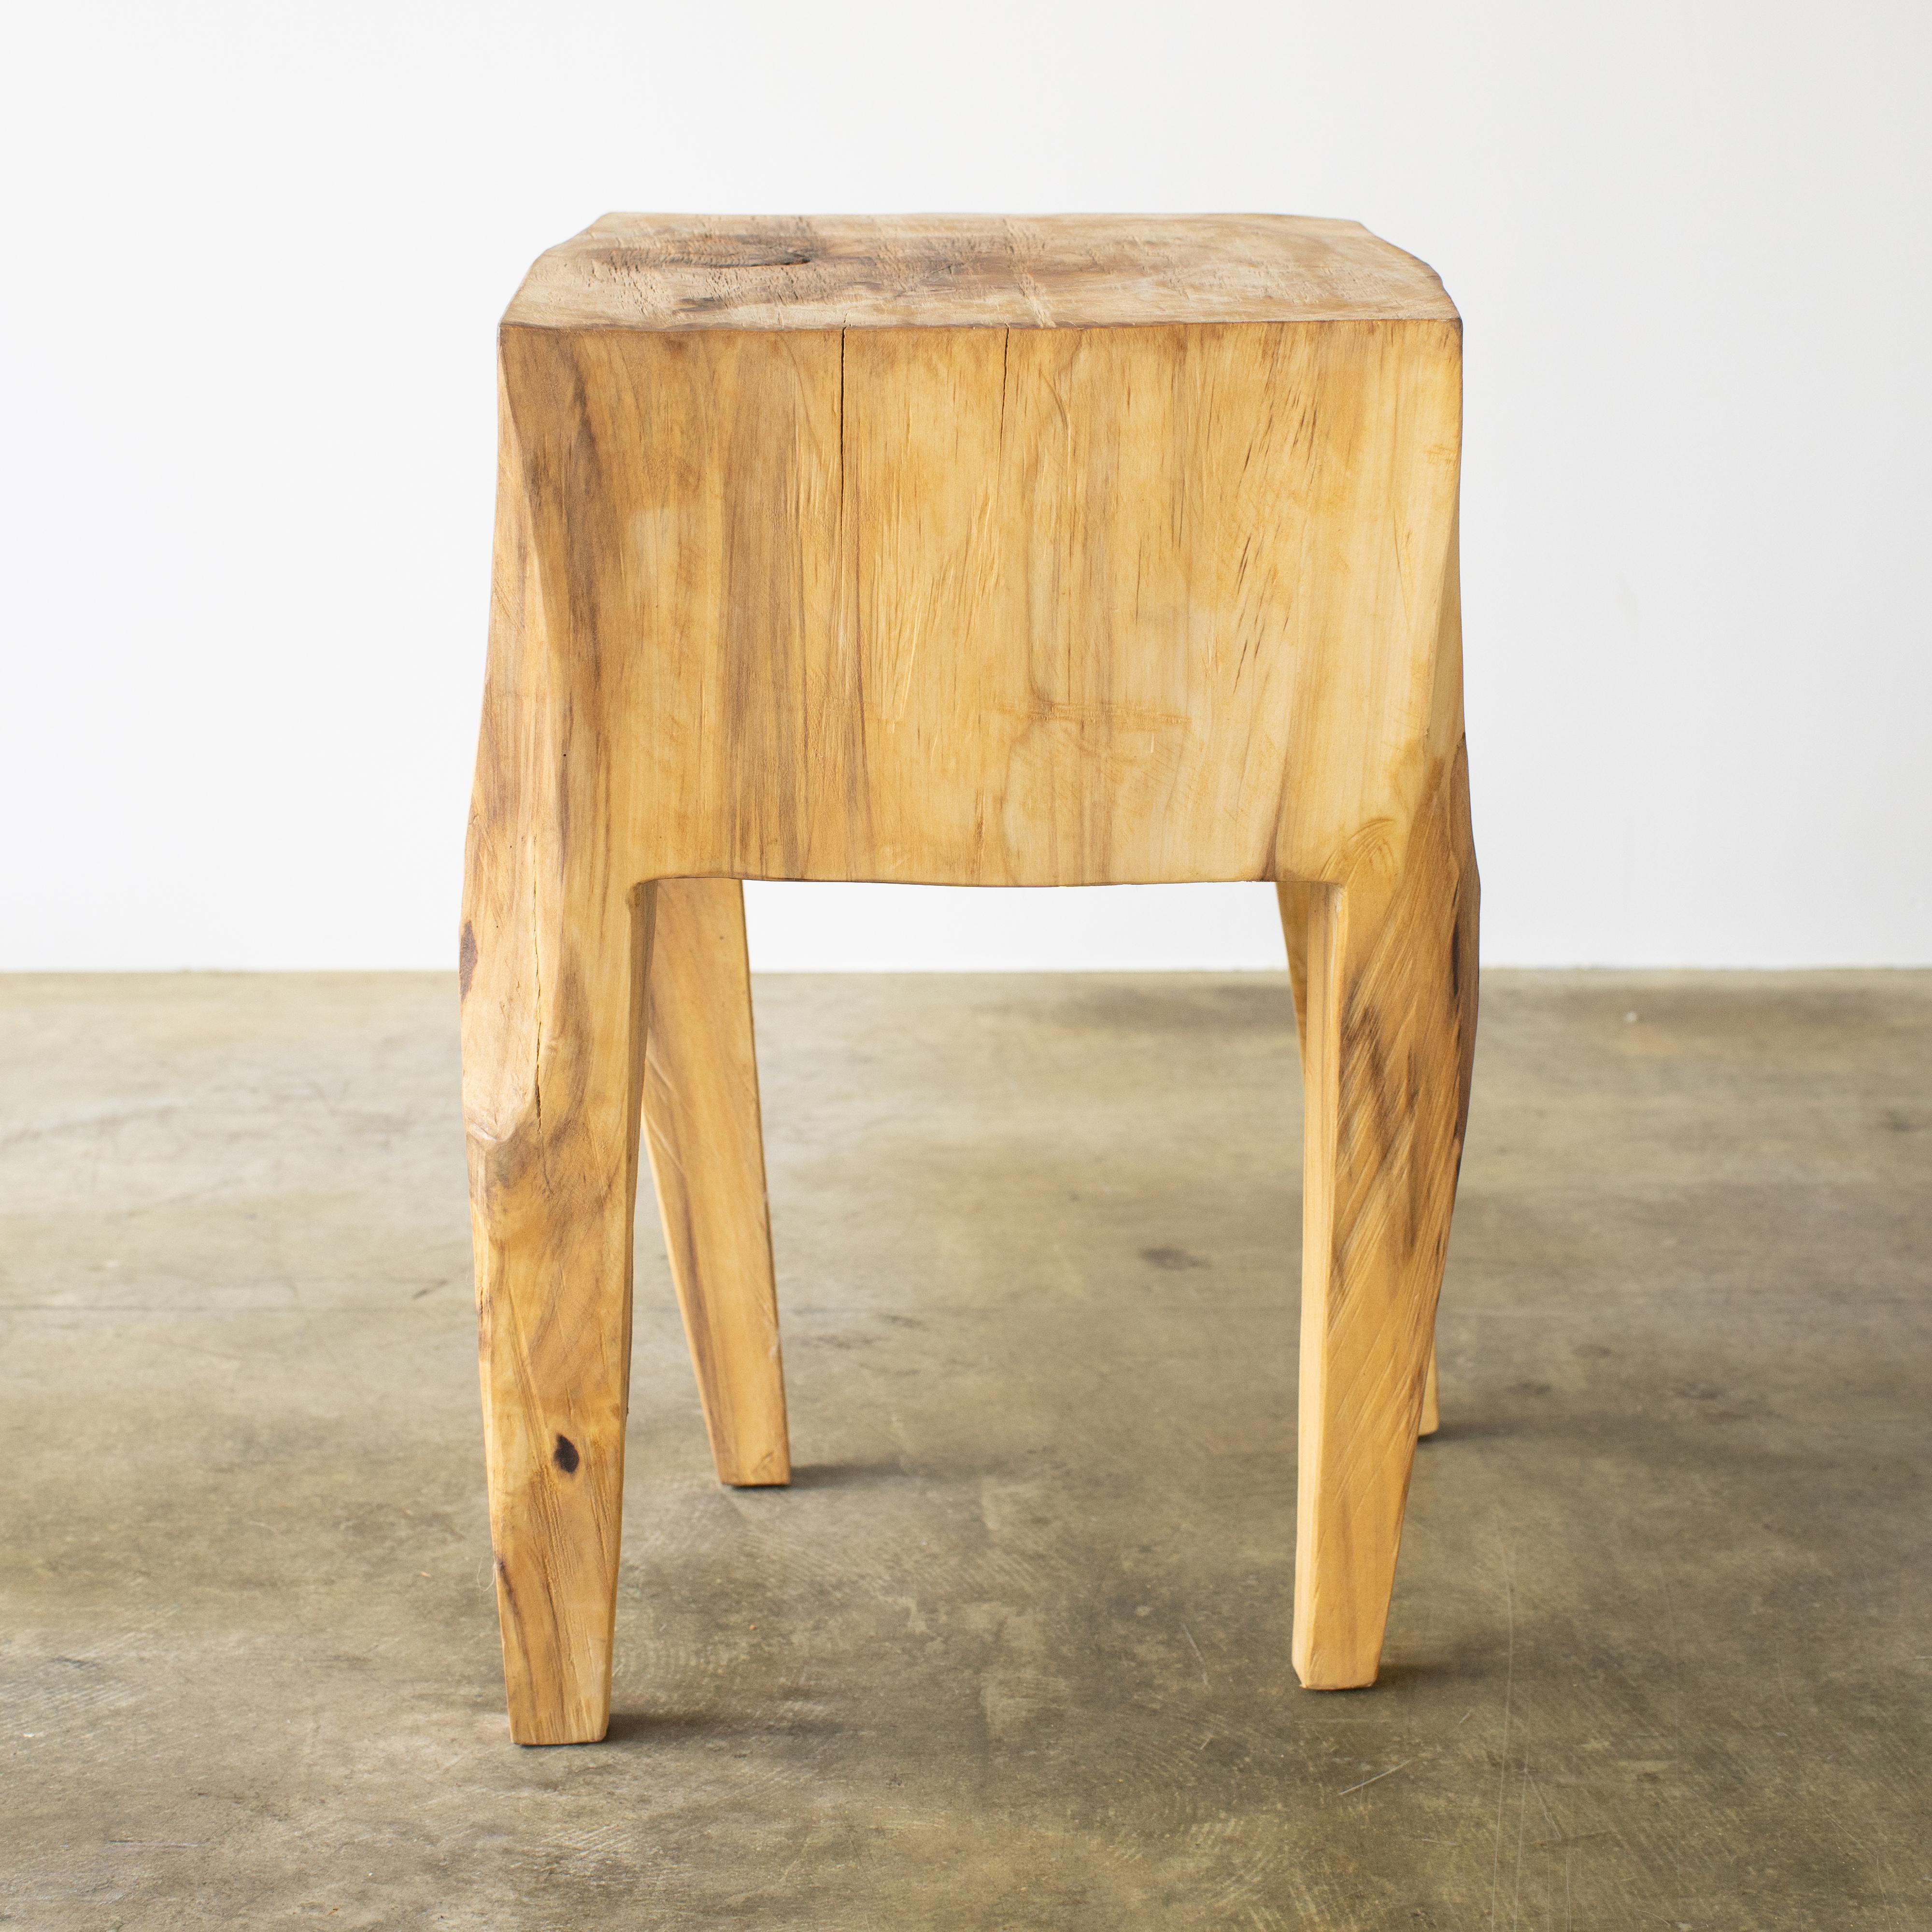 Hand-Carved Hiroyuki Nishimura Furniture Sculptural Wood Side Table 1 Tribal Glamping For Sale